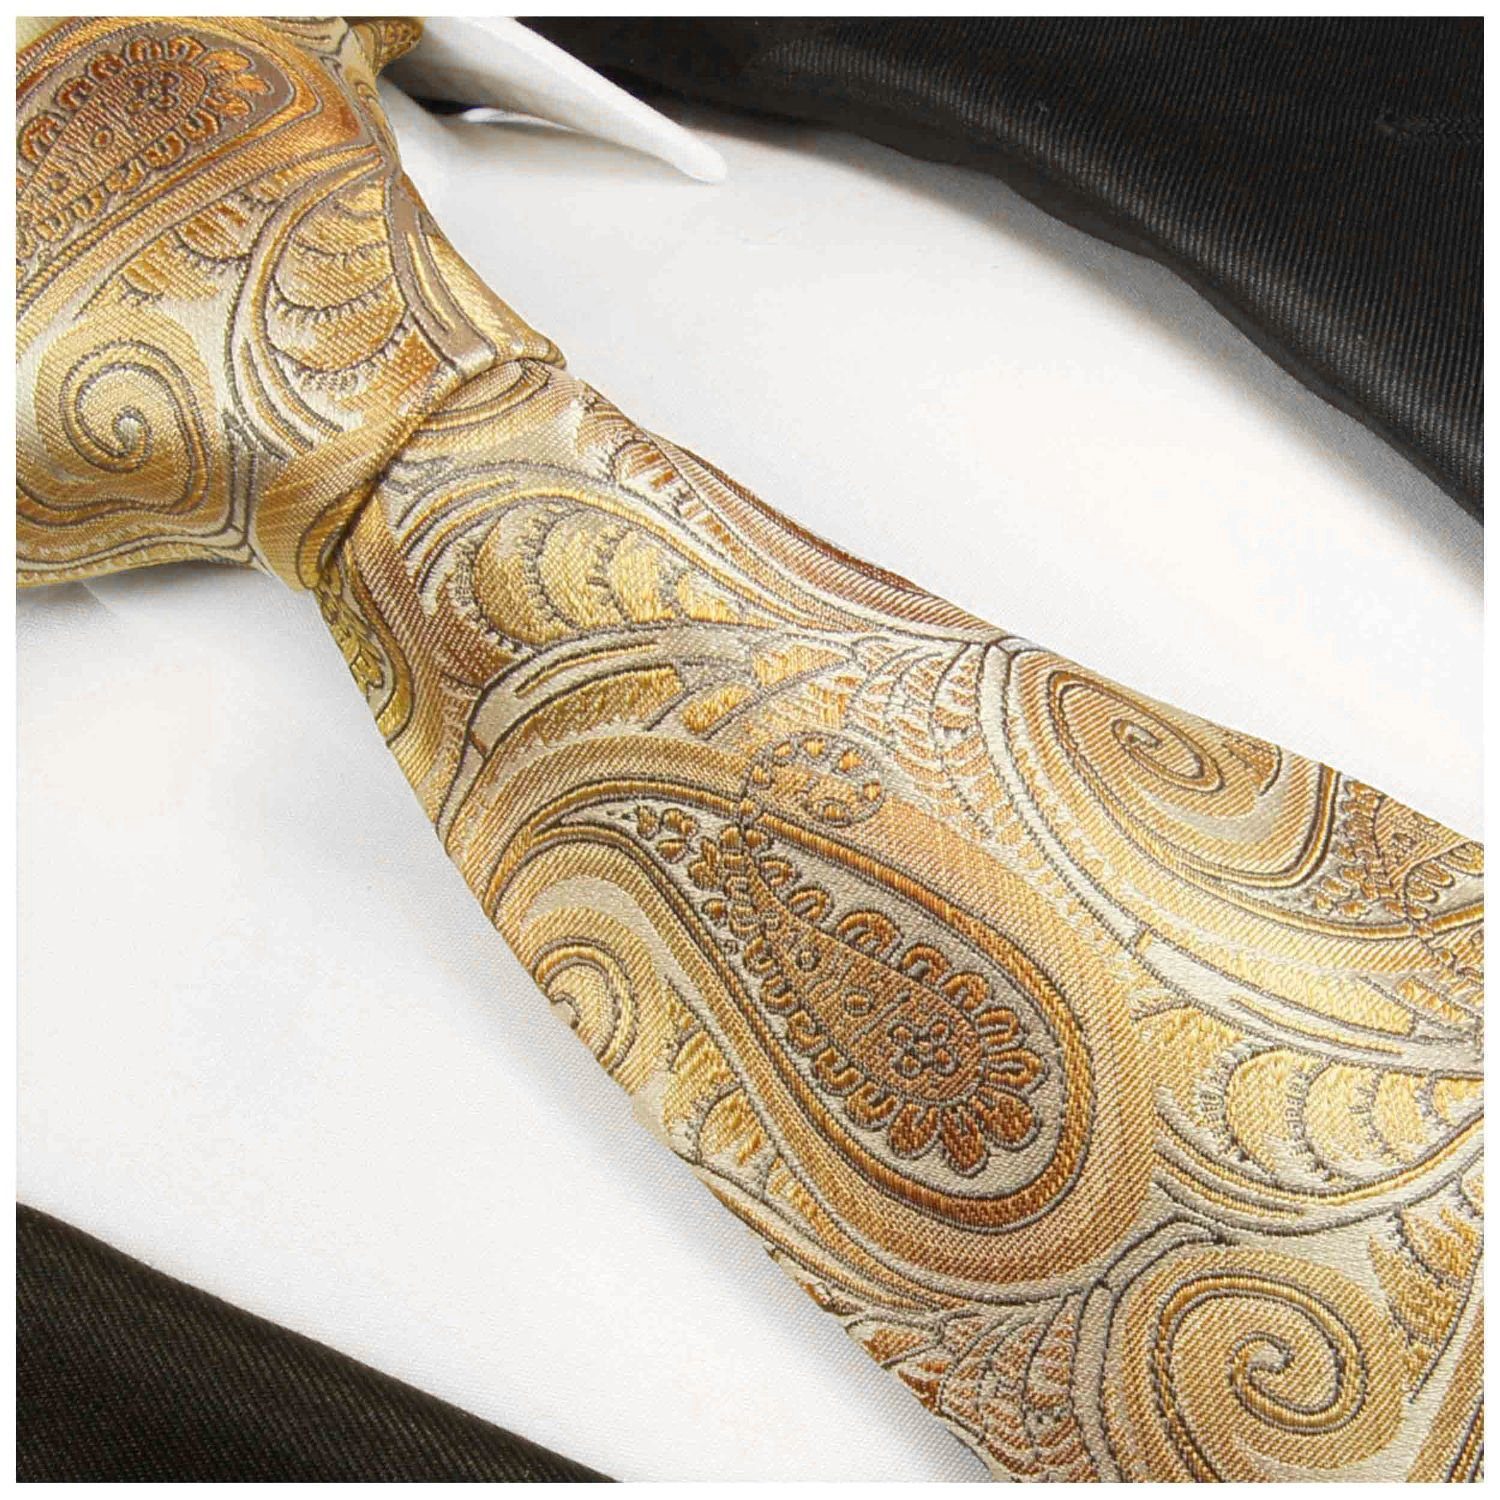 Paul Malone Krawatte Elegante Seidenkrawatte brokat (6cm), Schmal gelb Seide 2010 Herren paisley Schlips 100% braun